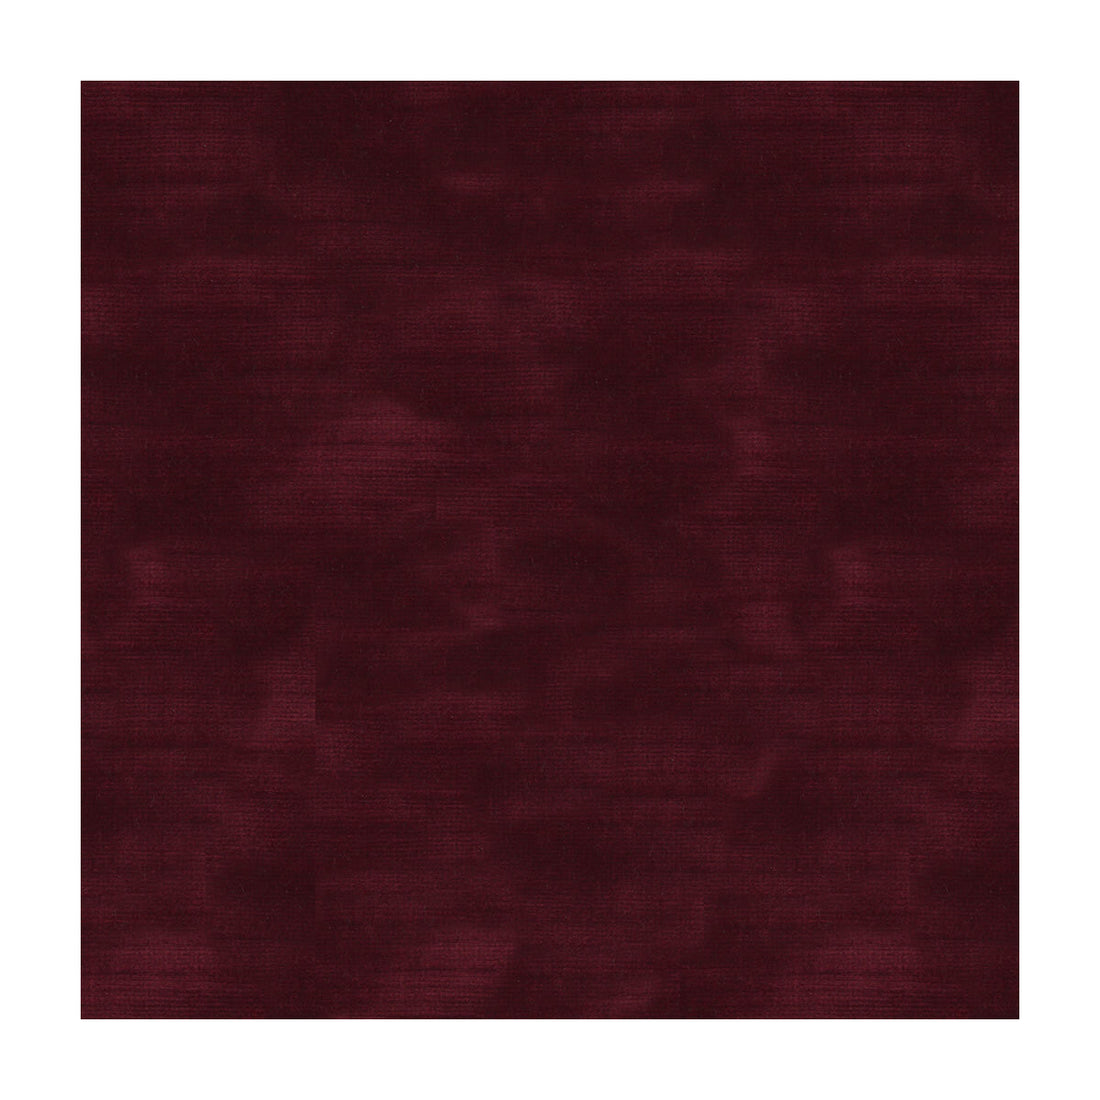 Lazare Velvet fabric in burgundy color - pattern 8016103.9.0 - by Brunschwig &amp; Fils